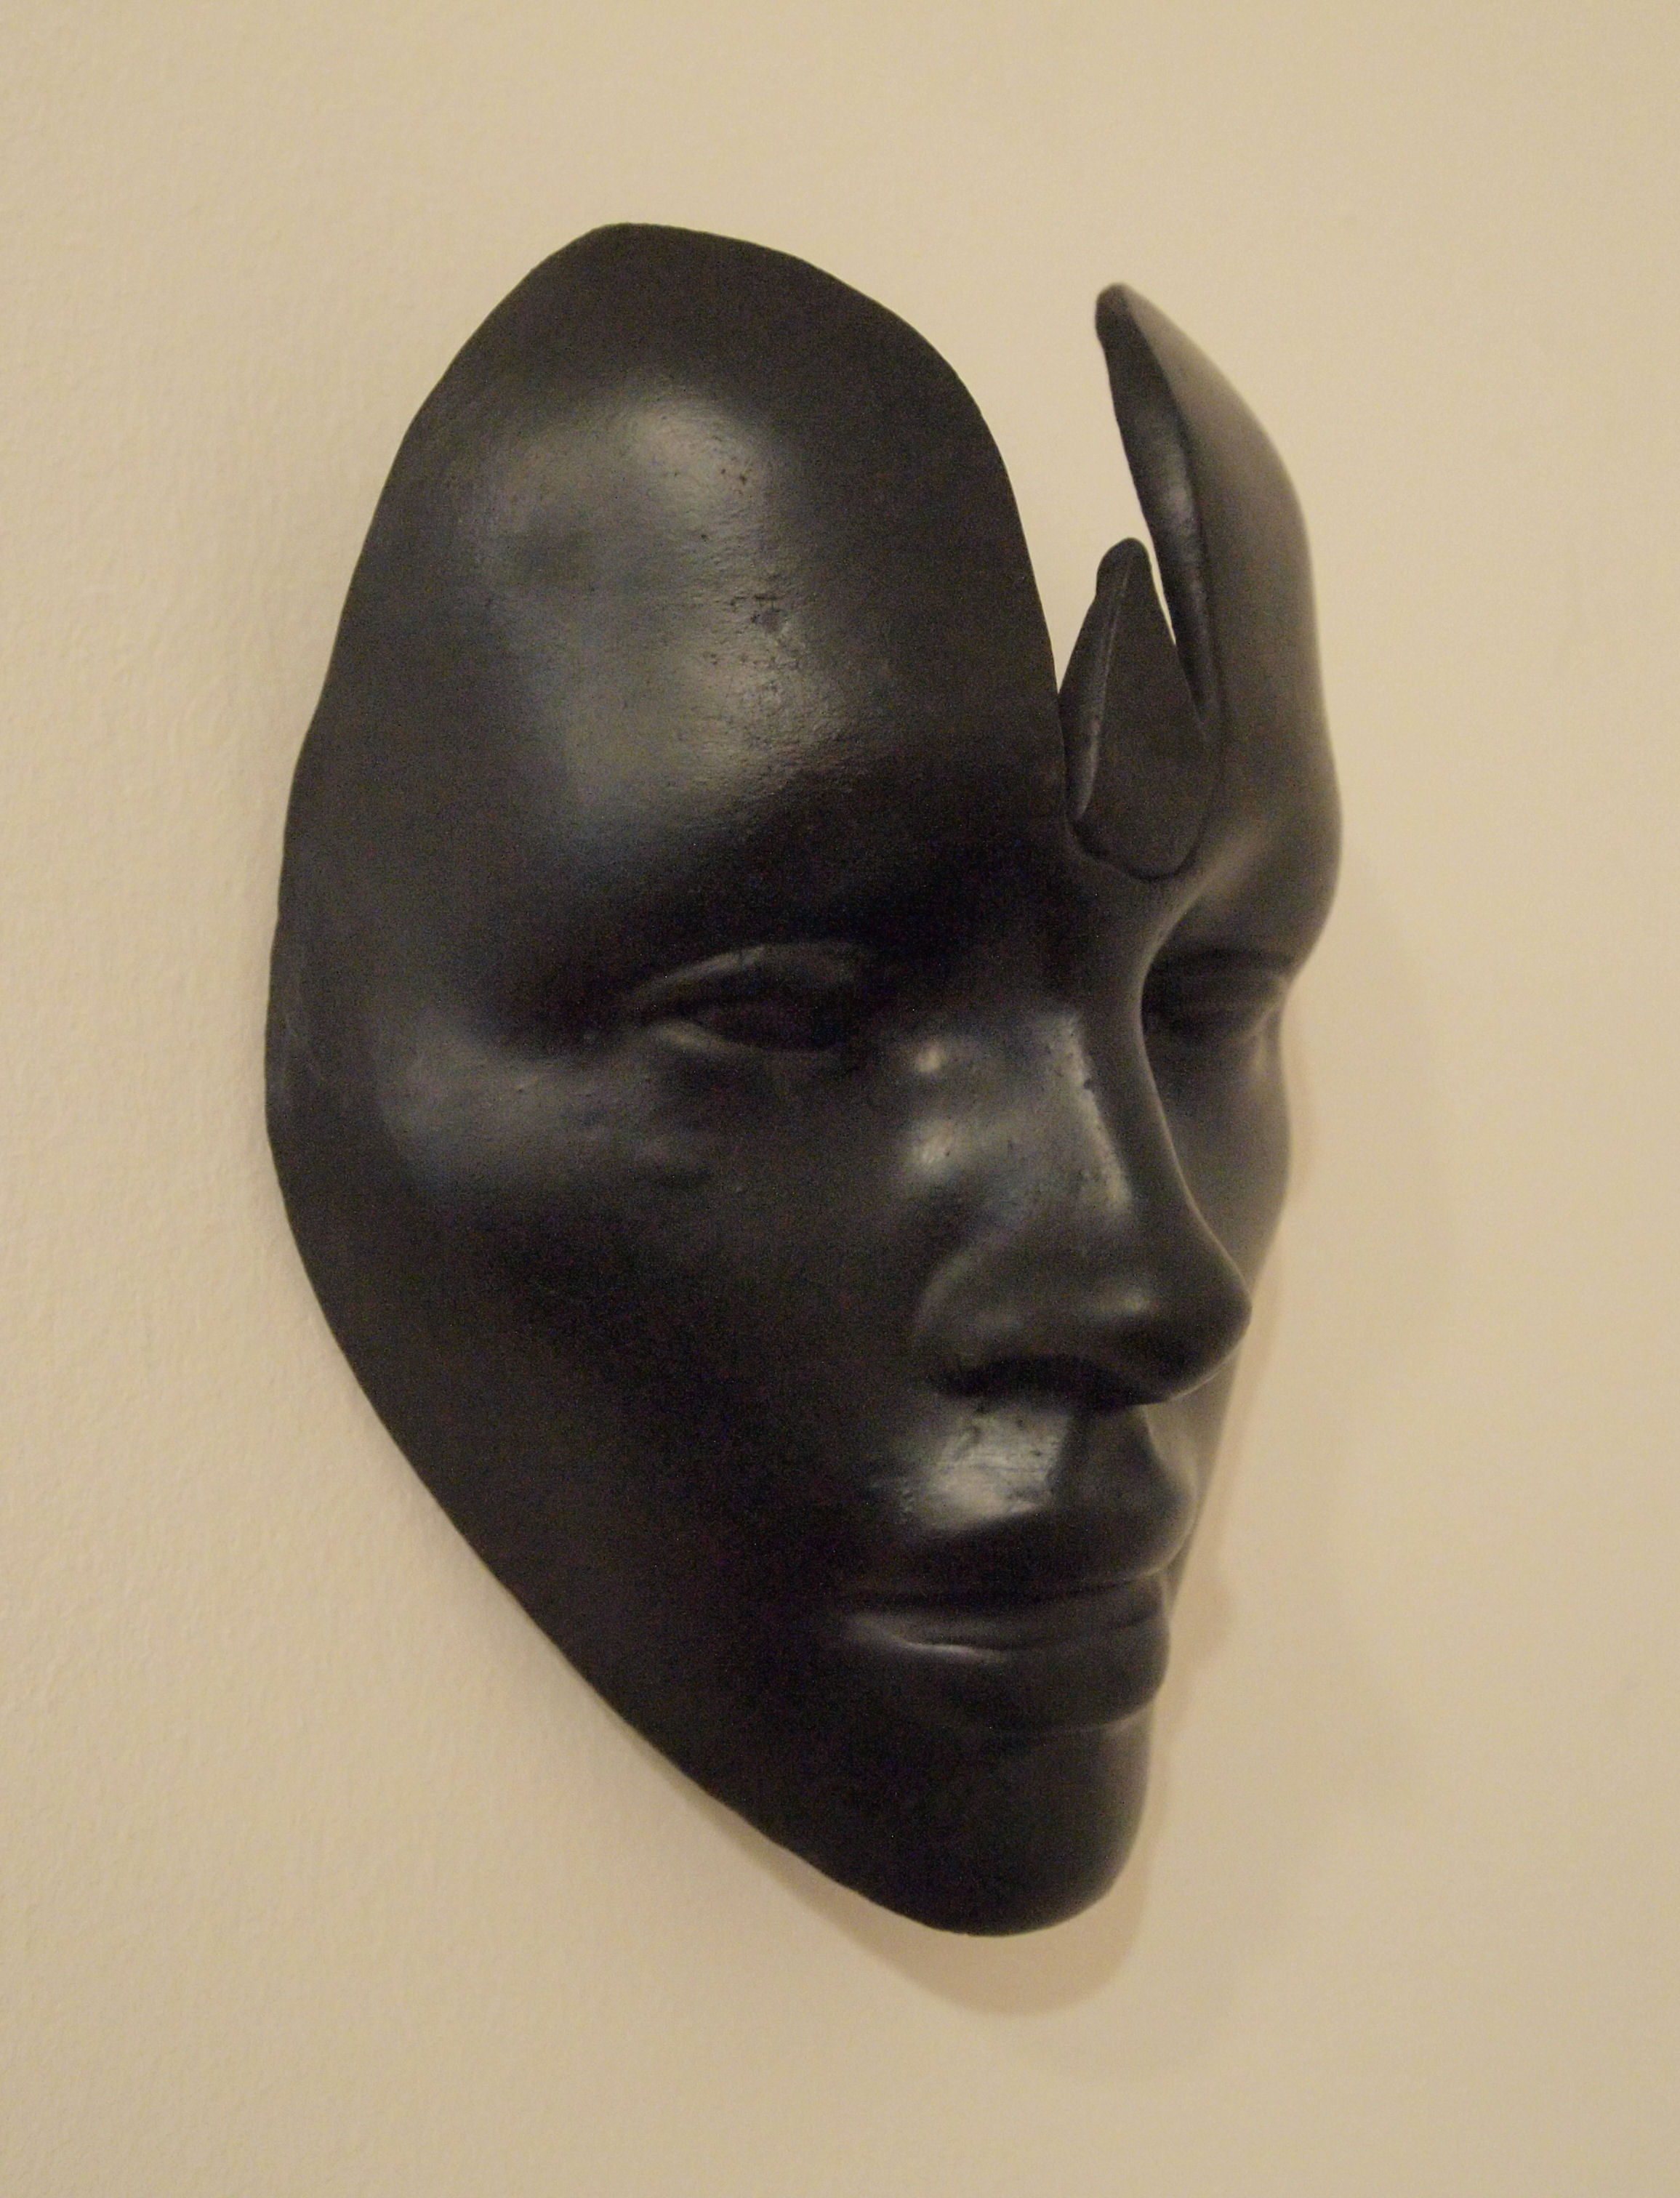 'Mask XII' by artist Julian Smith